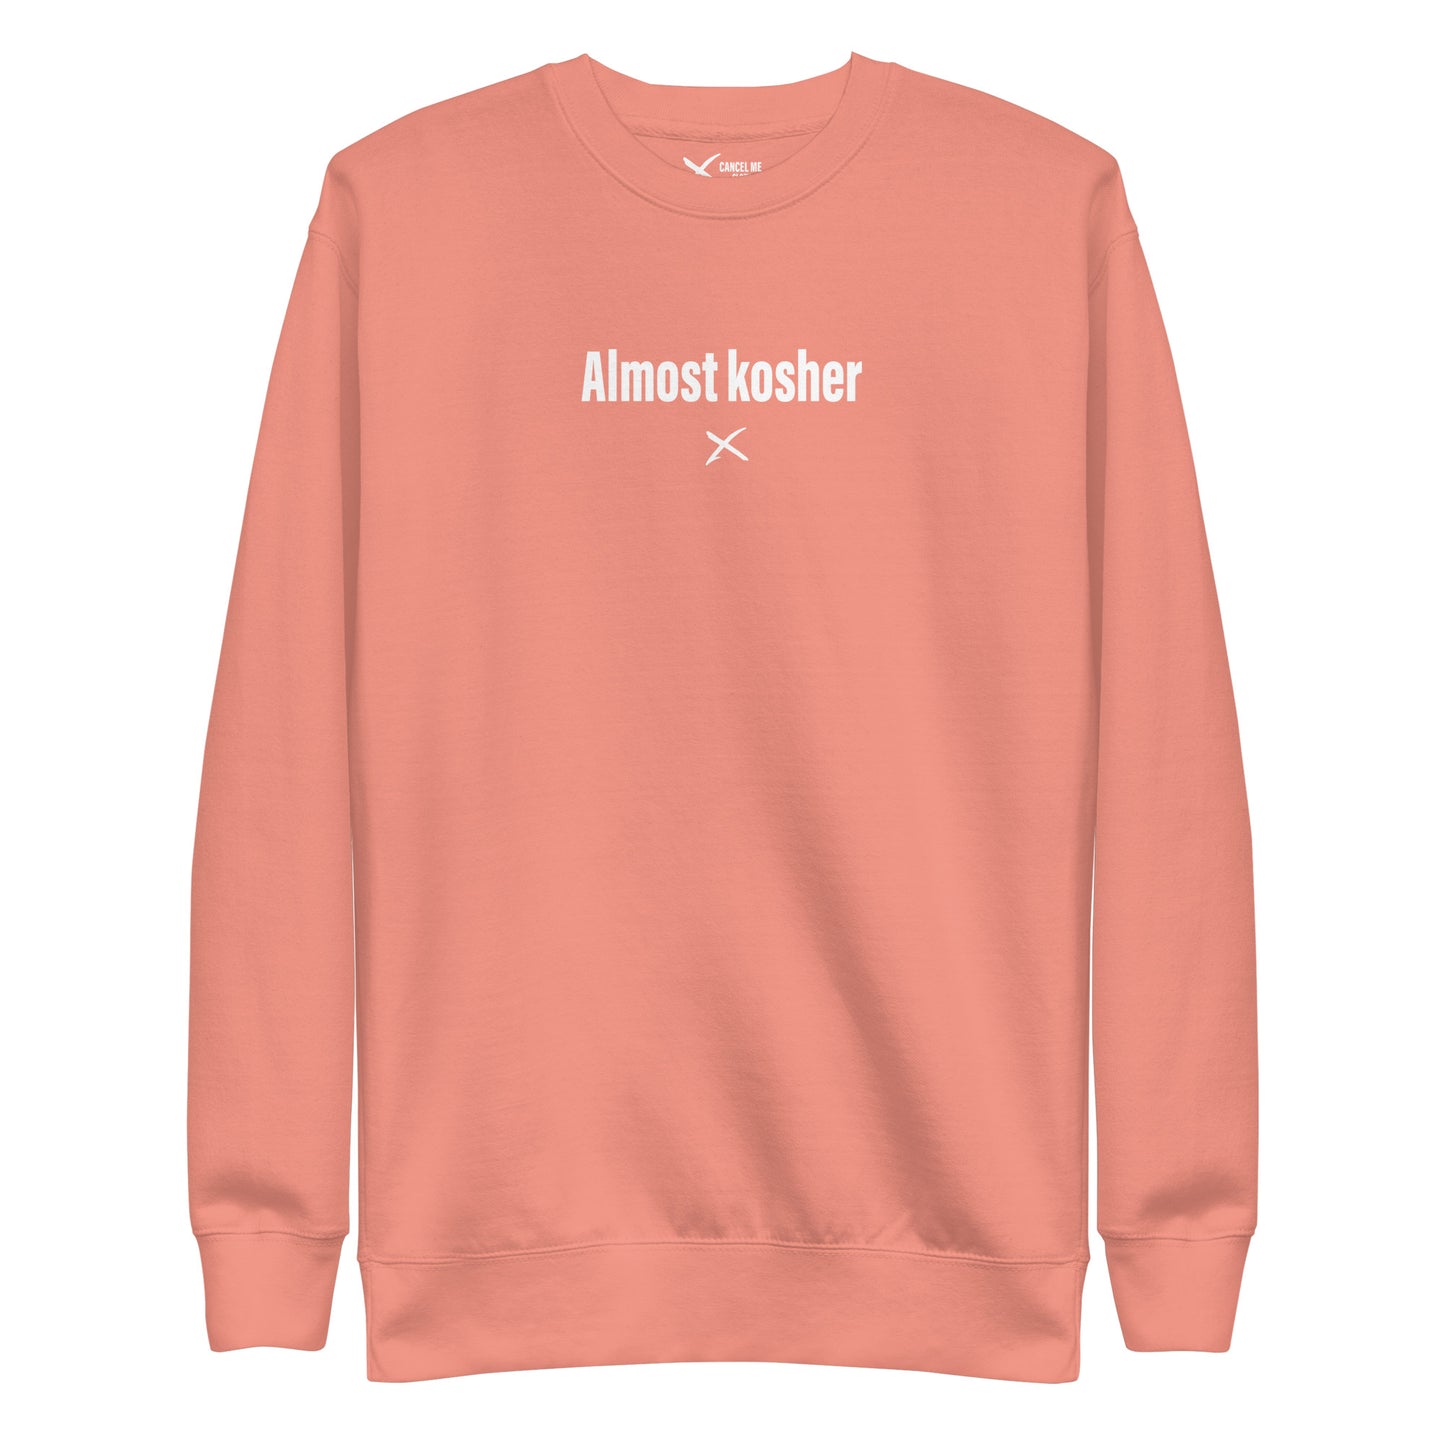 Almost kosher - Sweatshirt